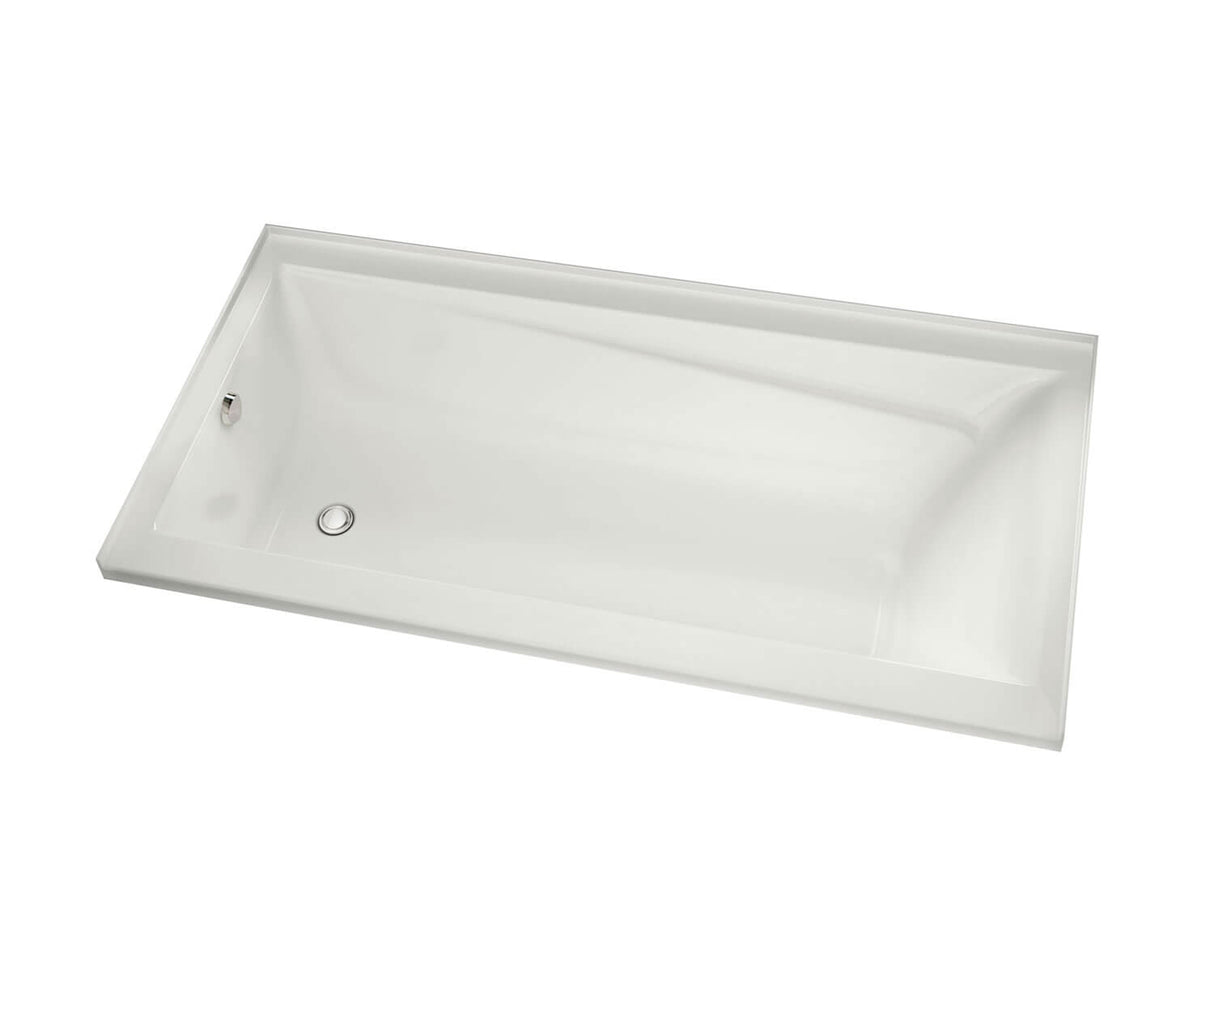 MAAX 106186-000-001-001 Exhibit 7242 IF Acrylic Alcove Left-Hand Drain Bathtub in White